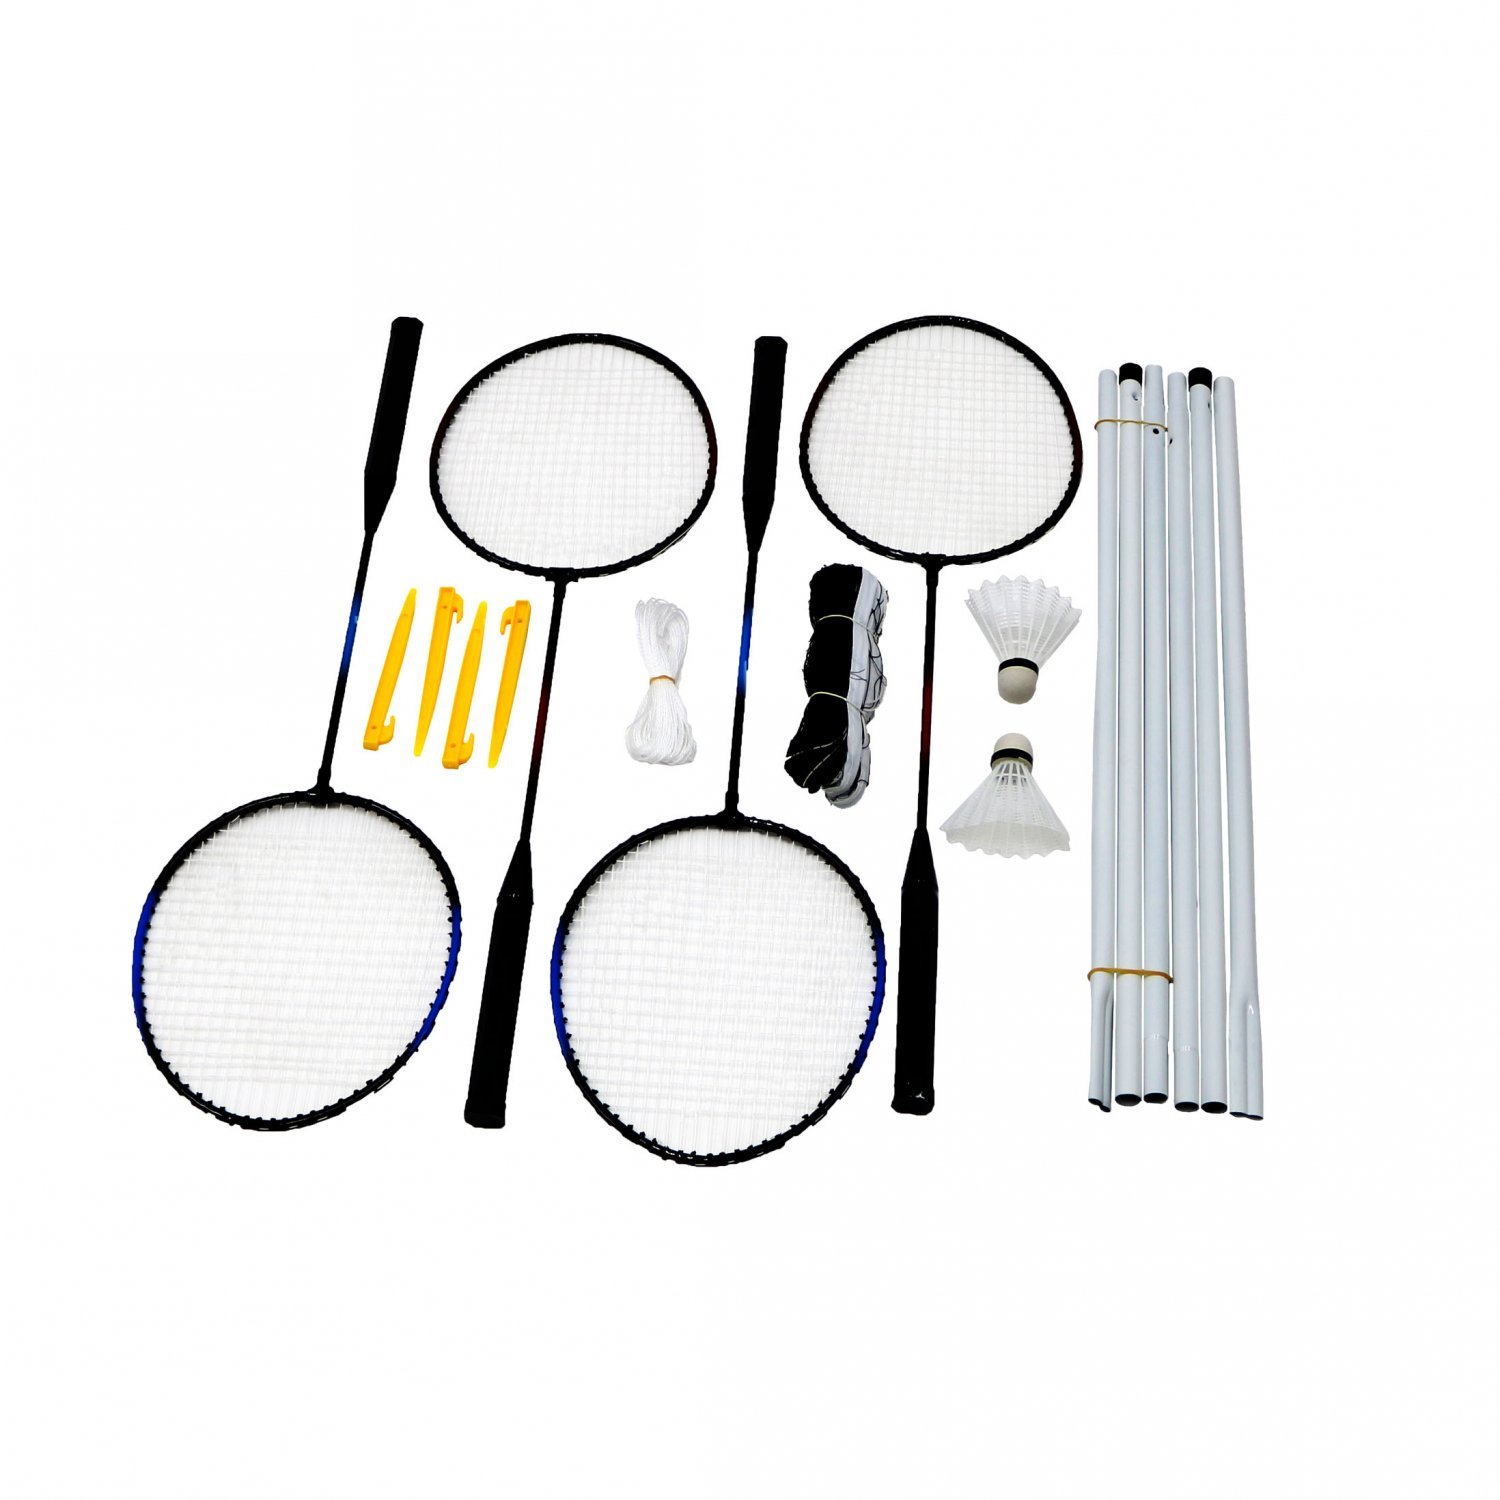 IMIKEYA 2 pcs Badminton Set Sponge Cover Badminton Racket Steel Alloy Sport Game Set for Beginner Indoor Sports Leisure Toys with 3 pcs Badminton Balls